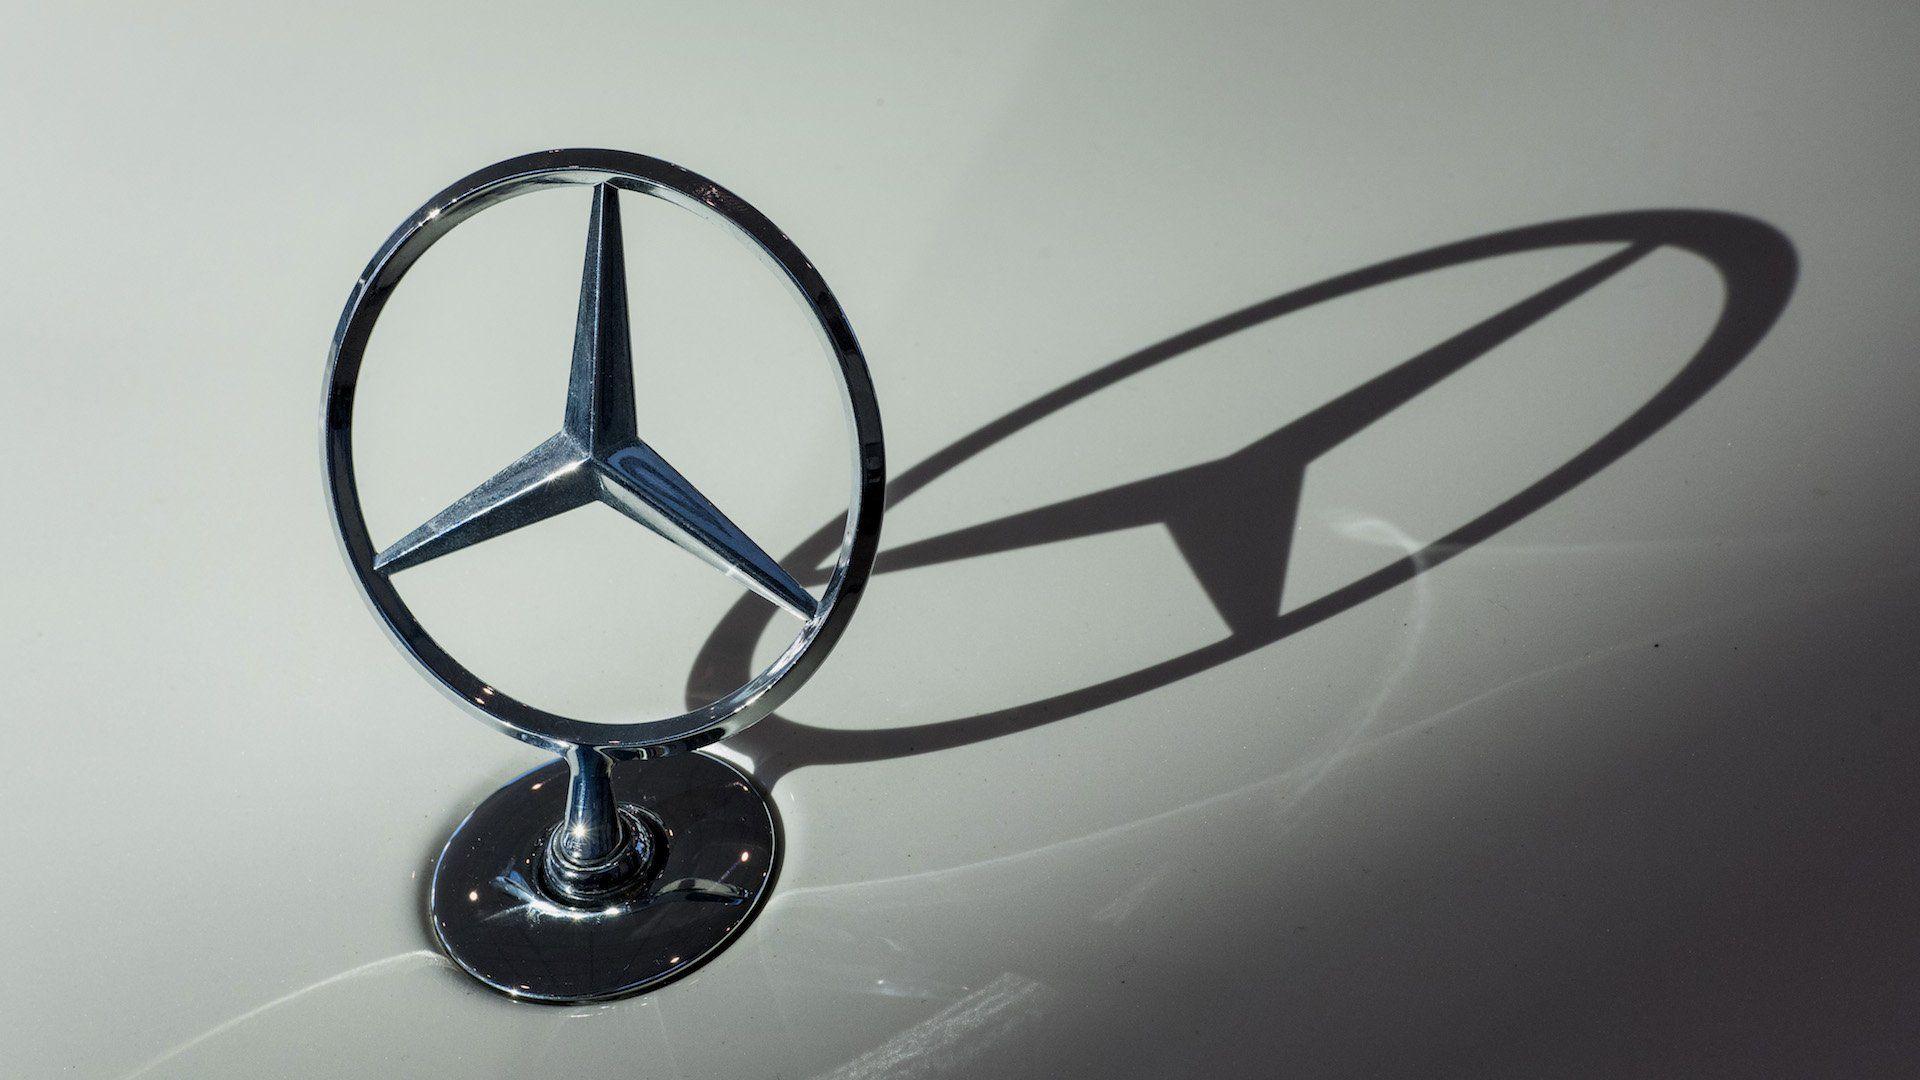 2018 Mercedes Logo - Mercedes Benz C Class Will Ditch Hood Ornament To Attract